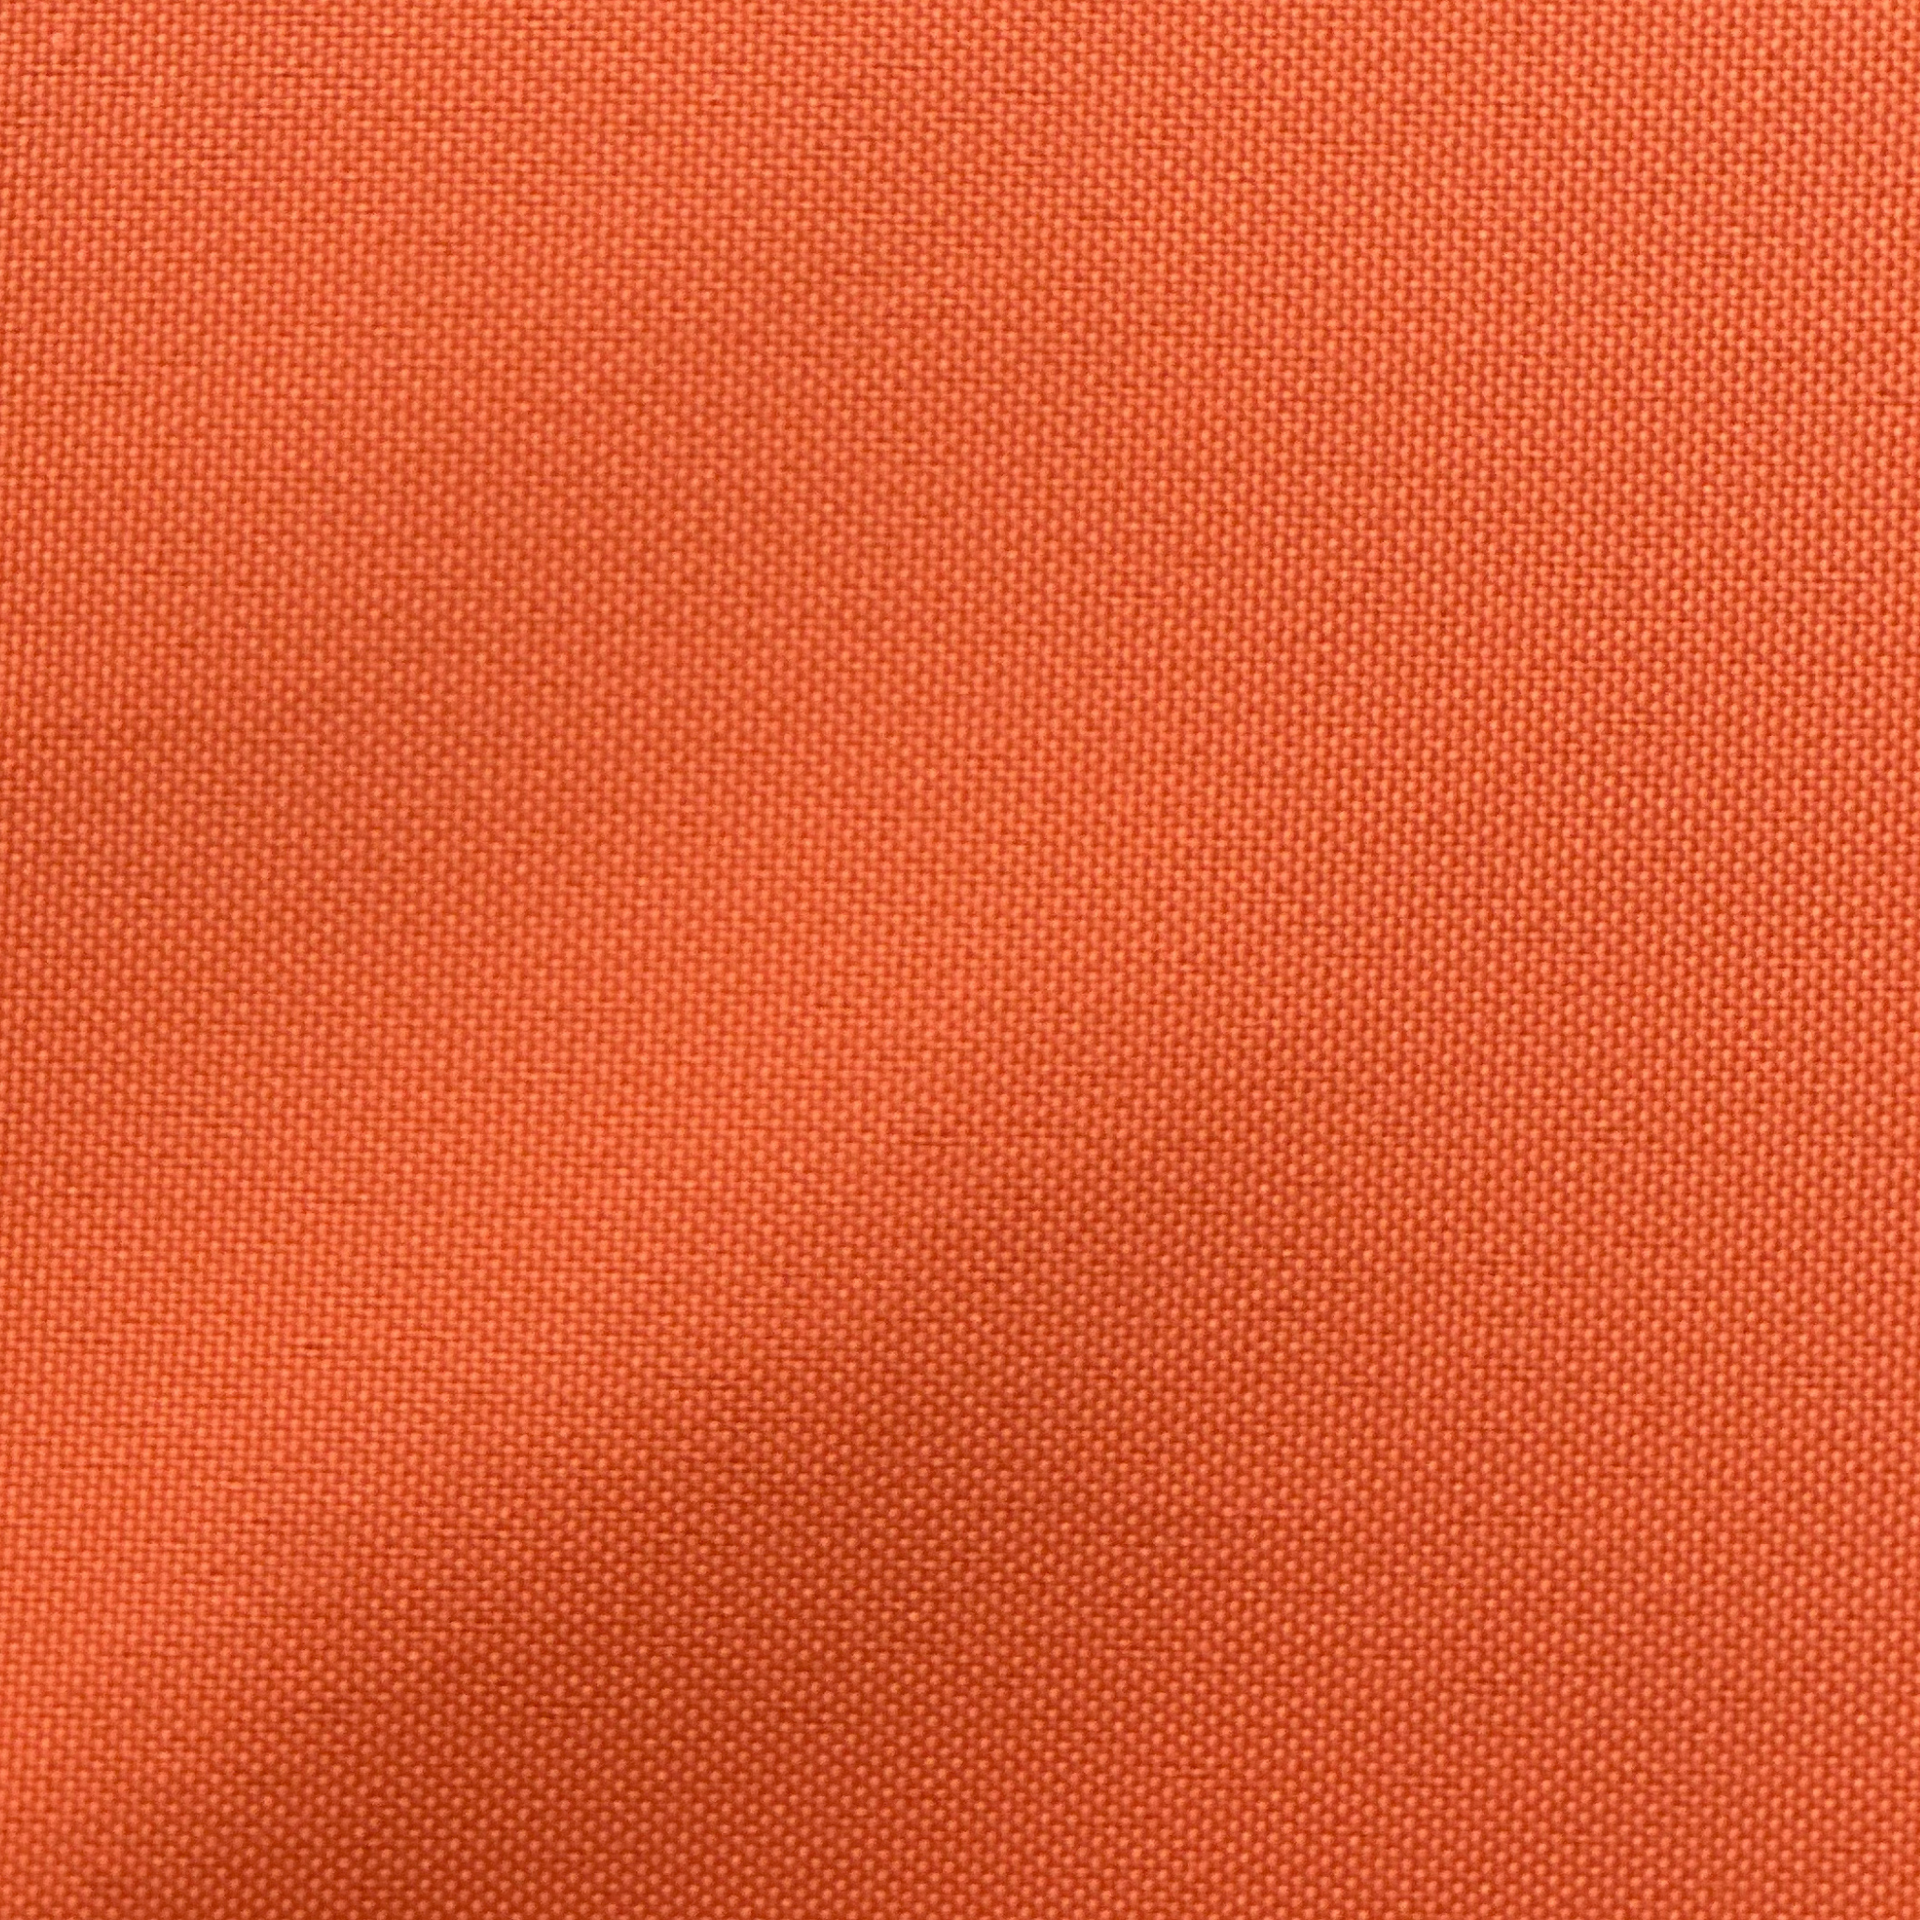 Color:Orange